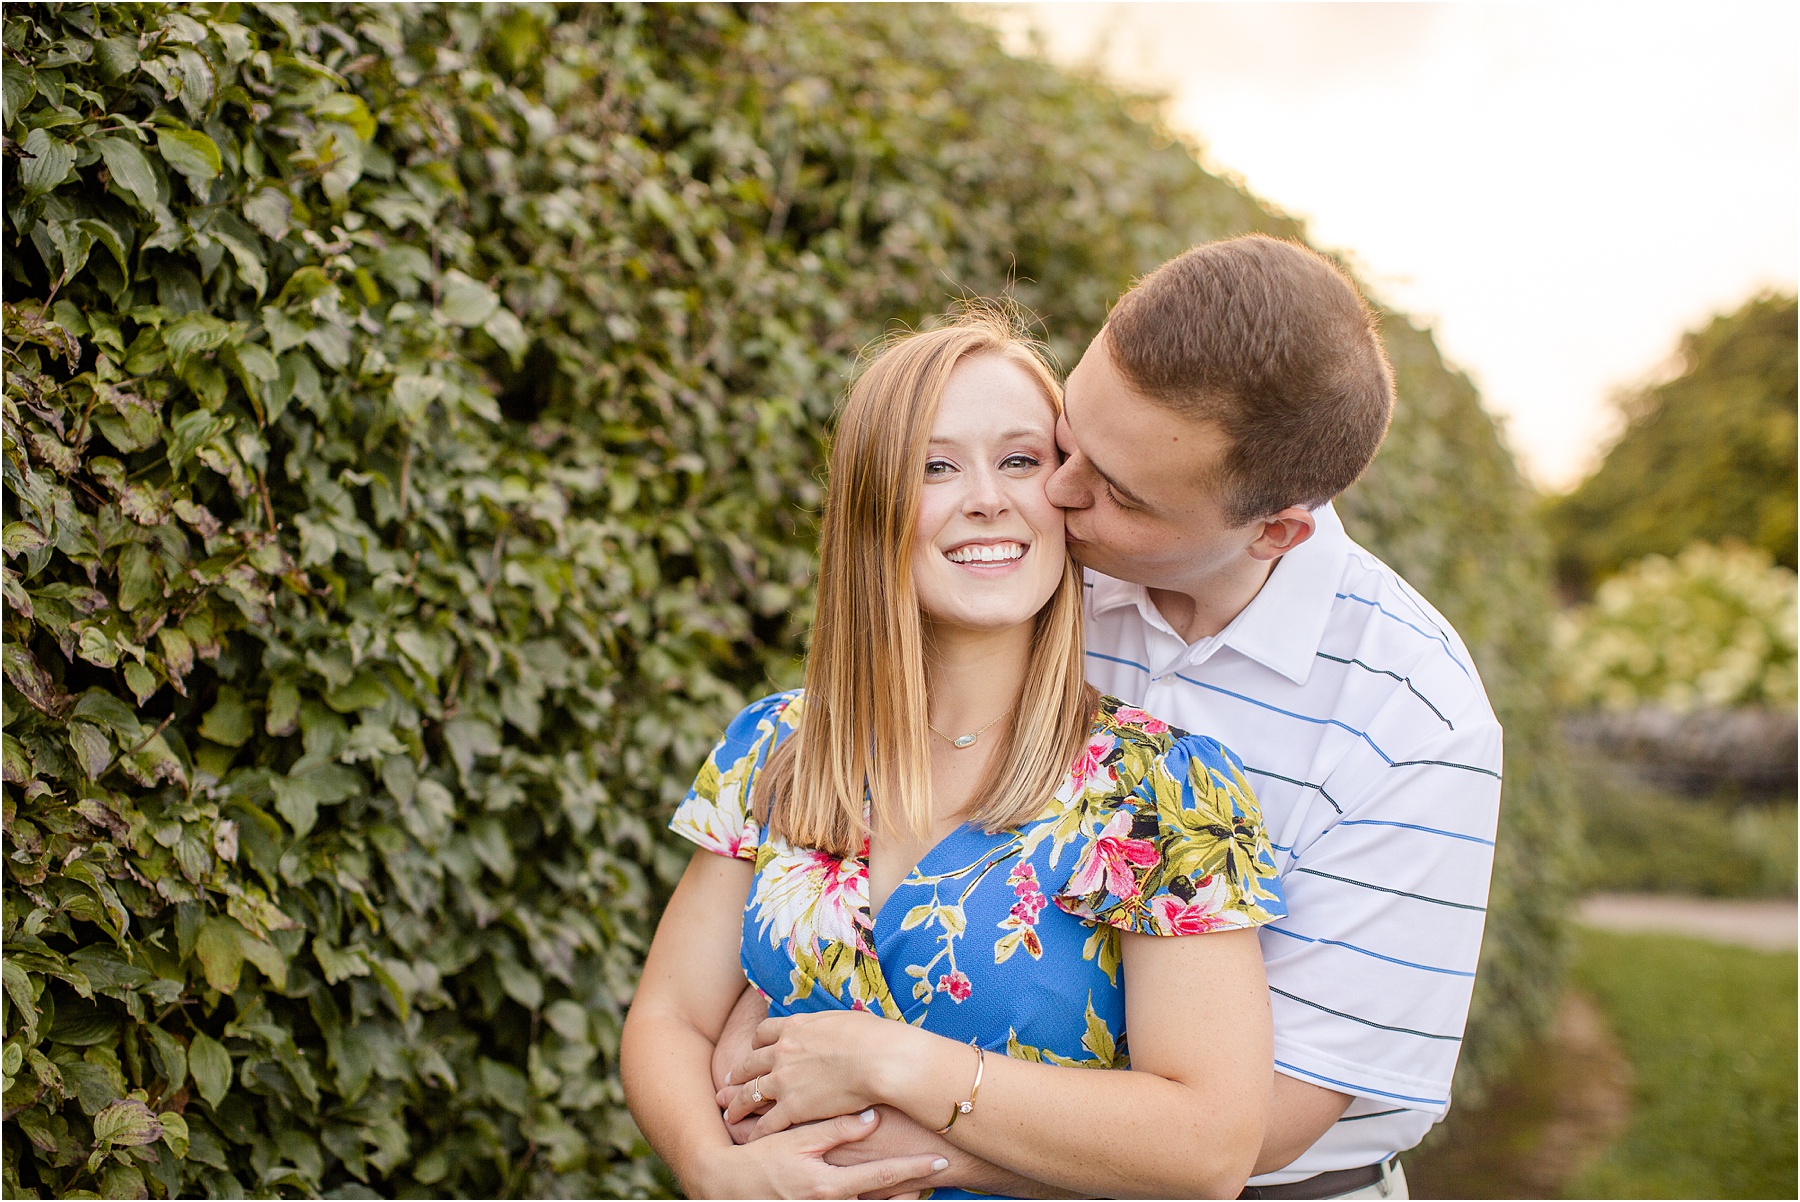 Guy kissing girls cheek in Kentucky for engagement photos